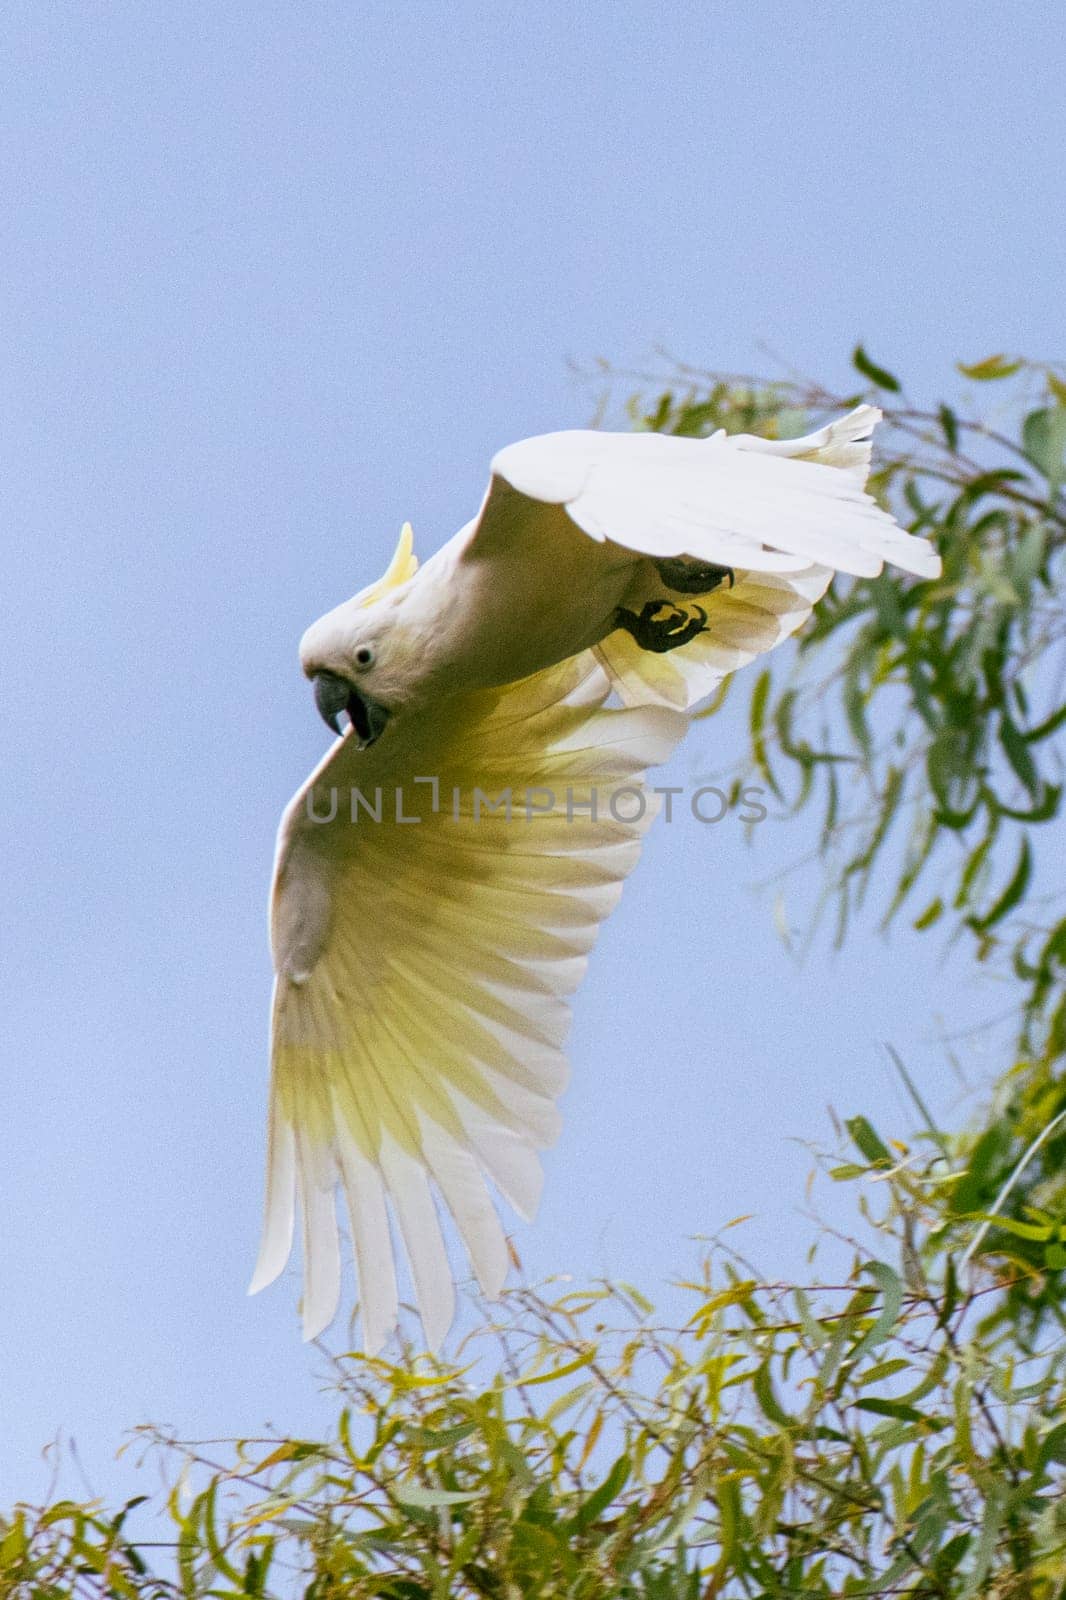 Wild sulphur-crested cockatoo in flight against grey skies by StefanMal